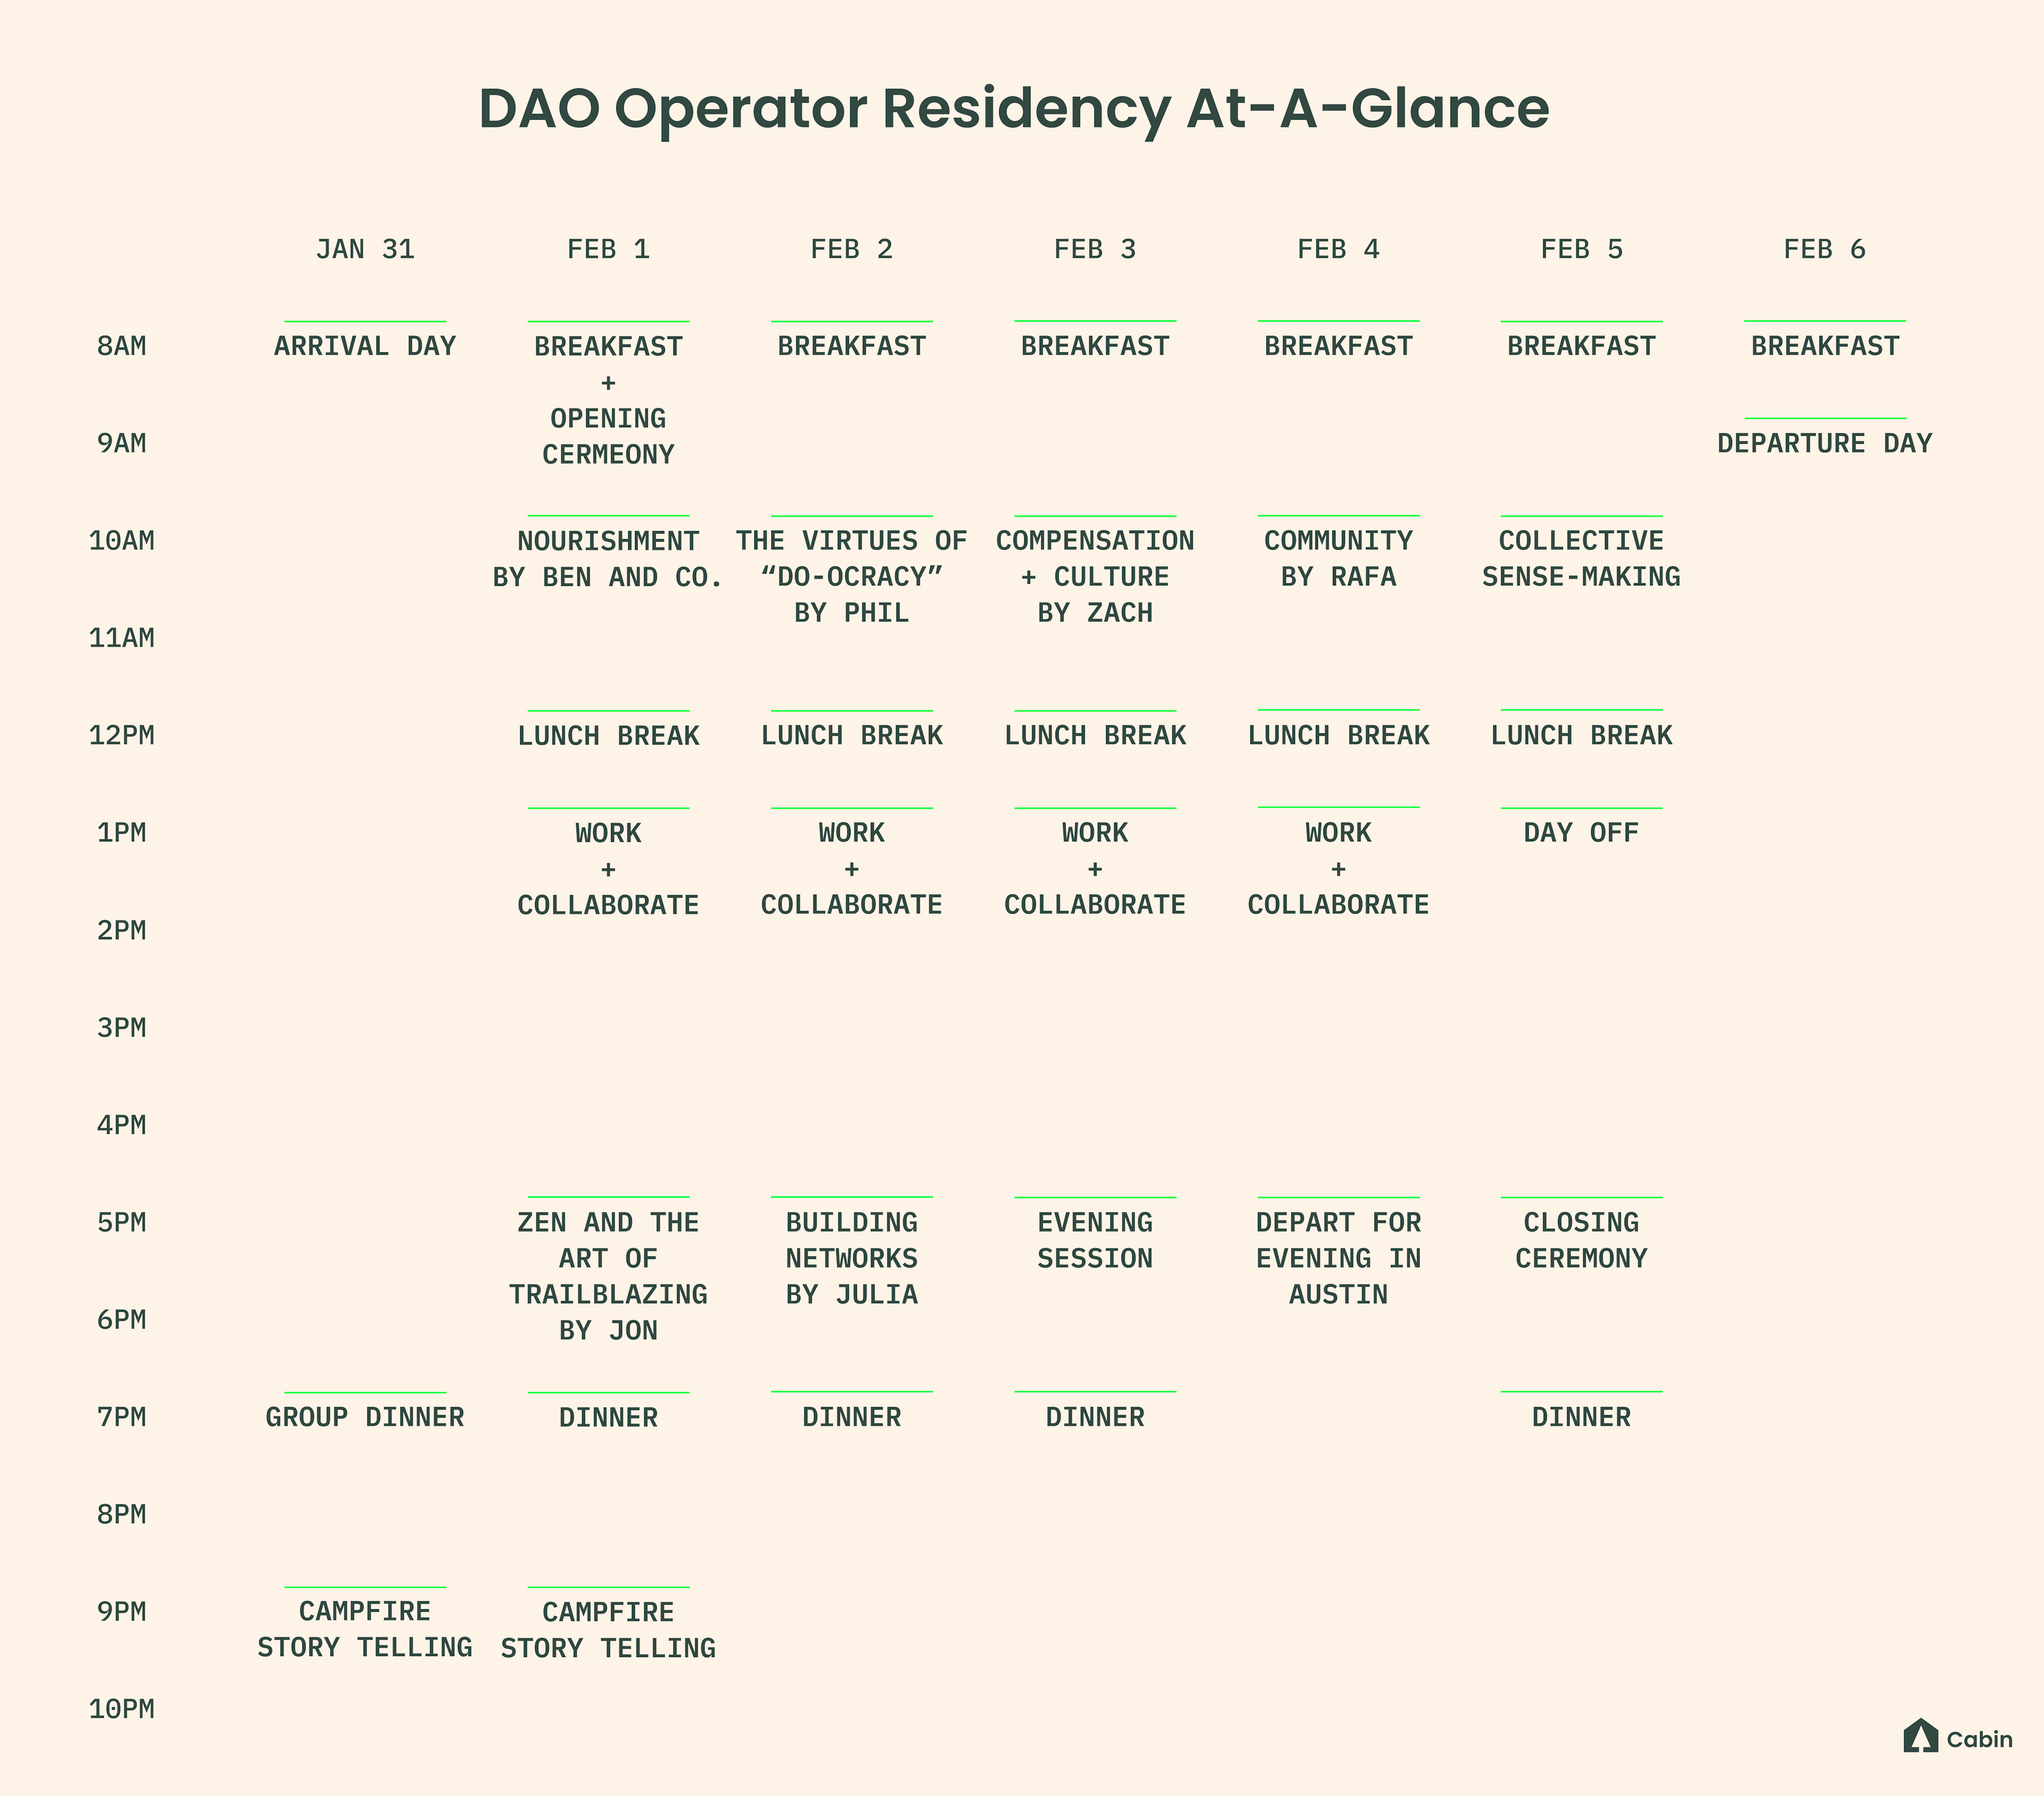 Media Guild members can also participate in Cabin's DAO Operator Residency program